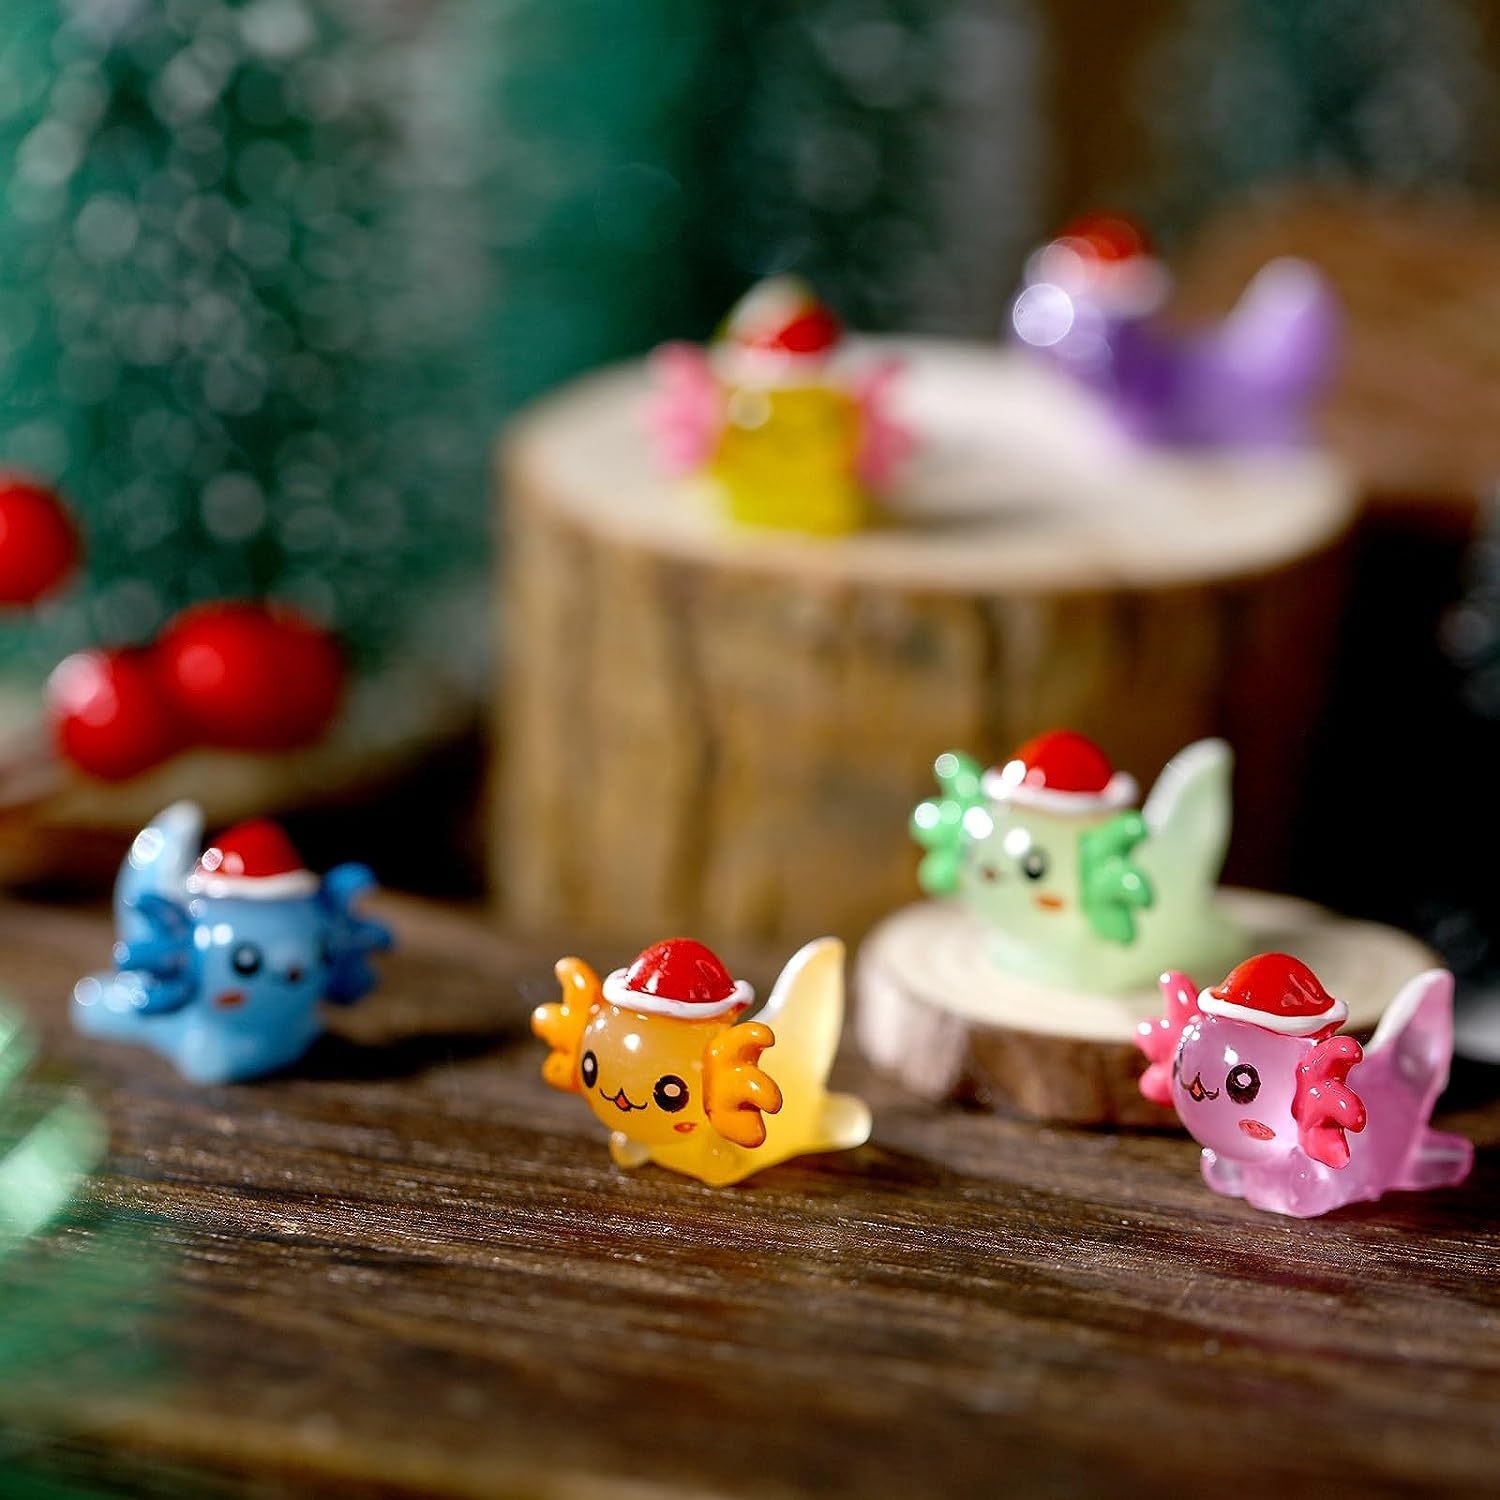 NewGtuizi Mini Axolotl Resin Charms 24Pcs Mini Axolotl Resin Figurine Toy  Miniature Axolotl Ornament Tiny Animal Figures for DIY Garden Dollhouse